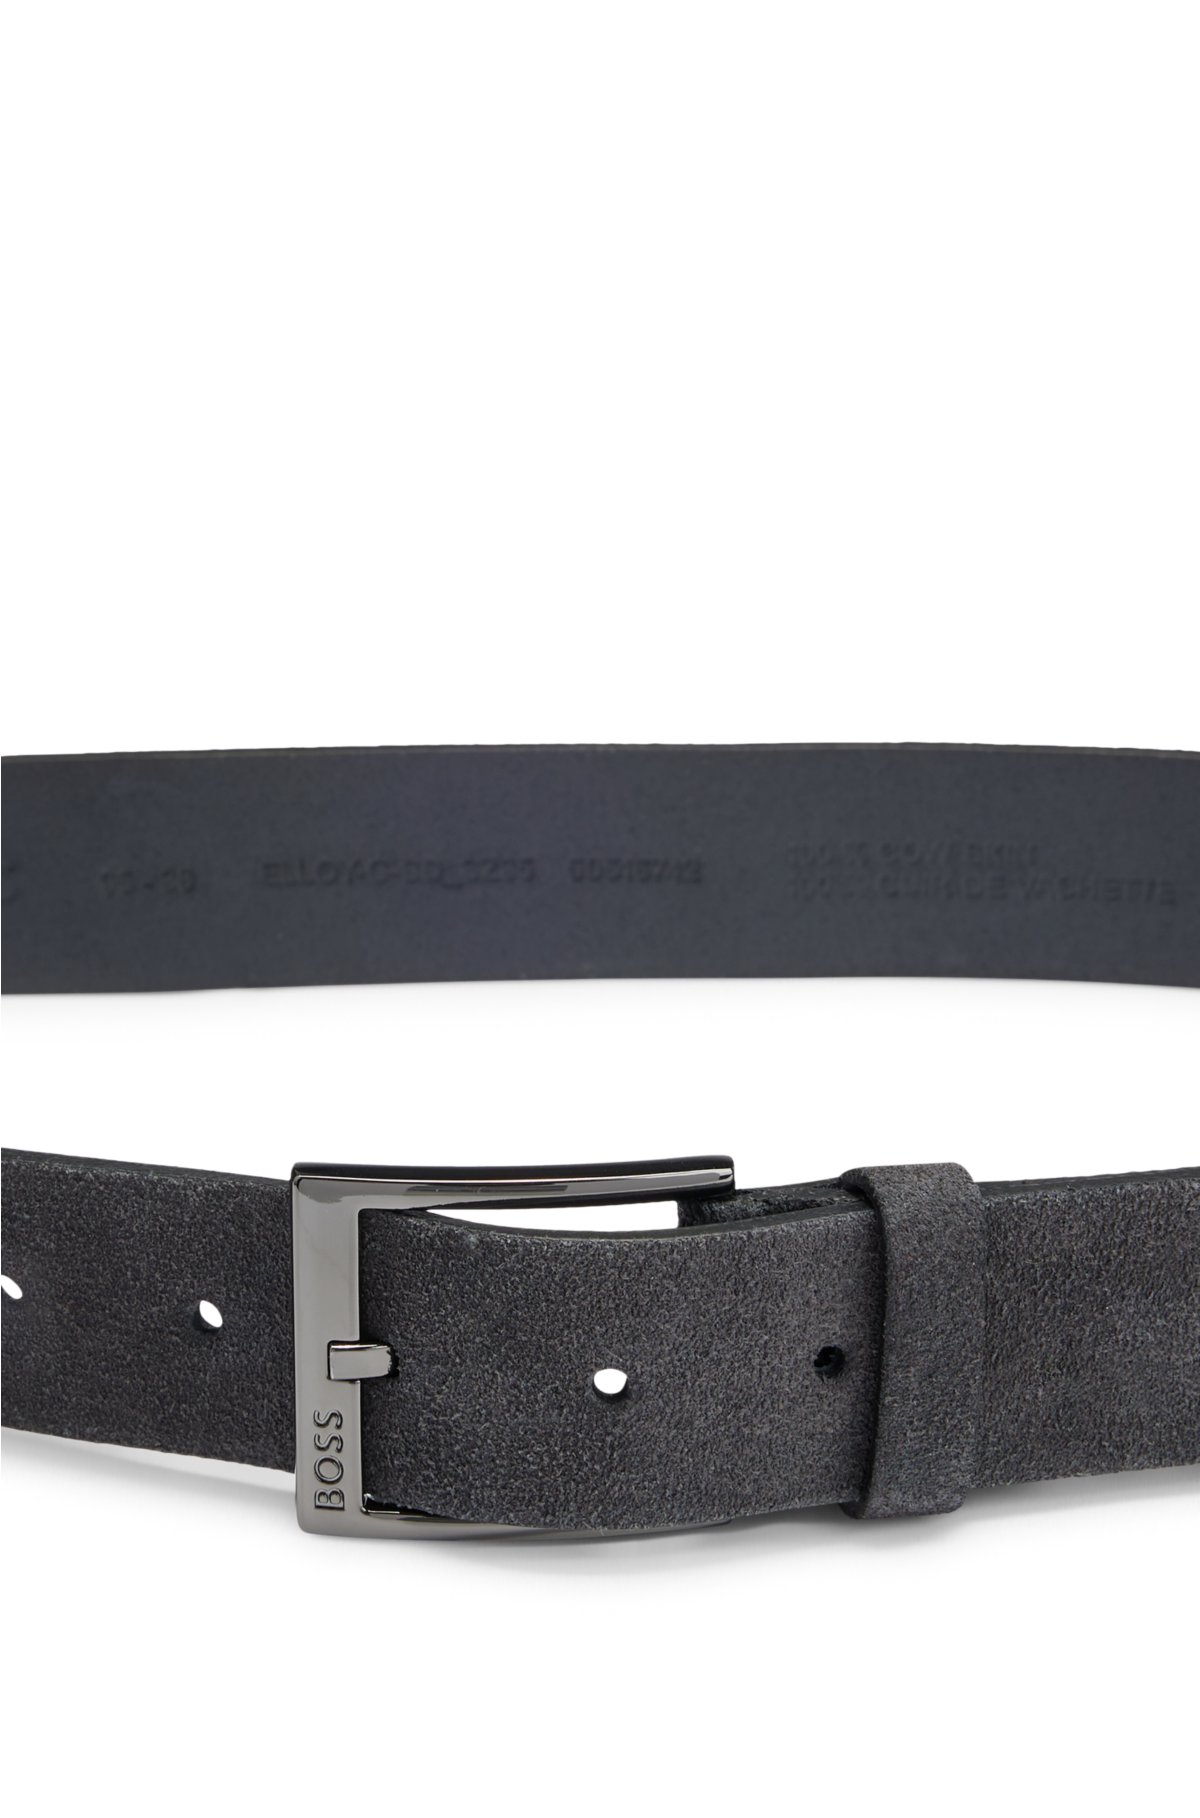 Italian-suede belt with engraved logo buckle, Dark Blue